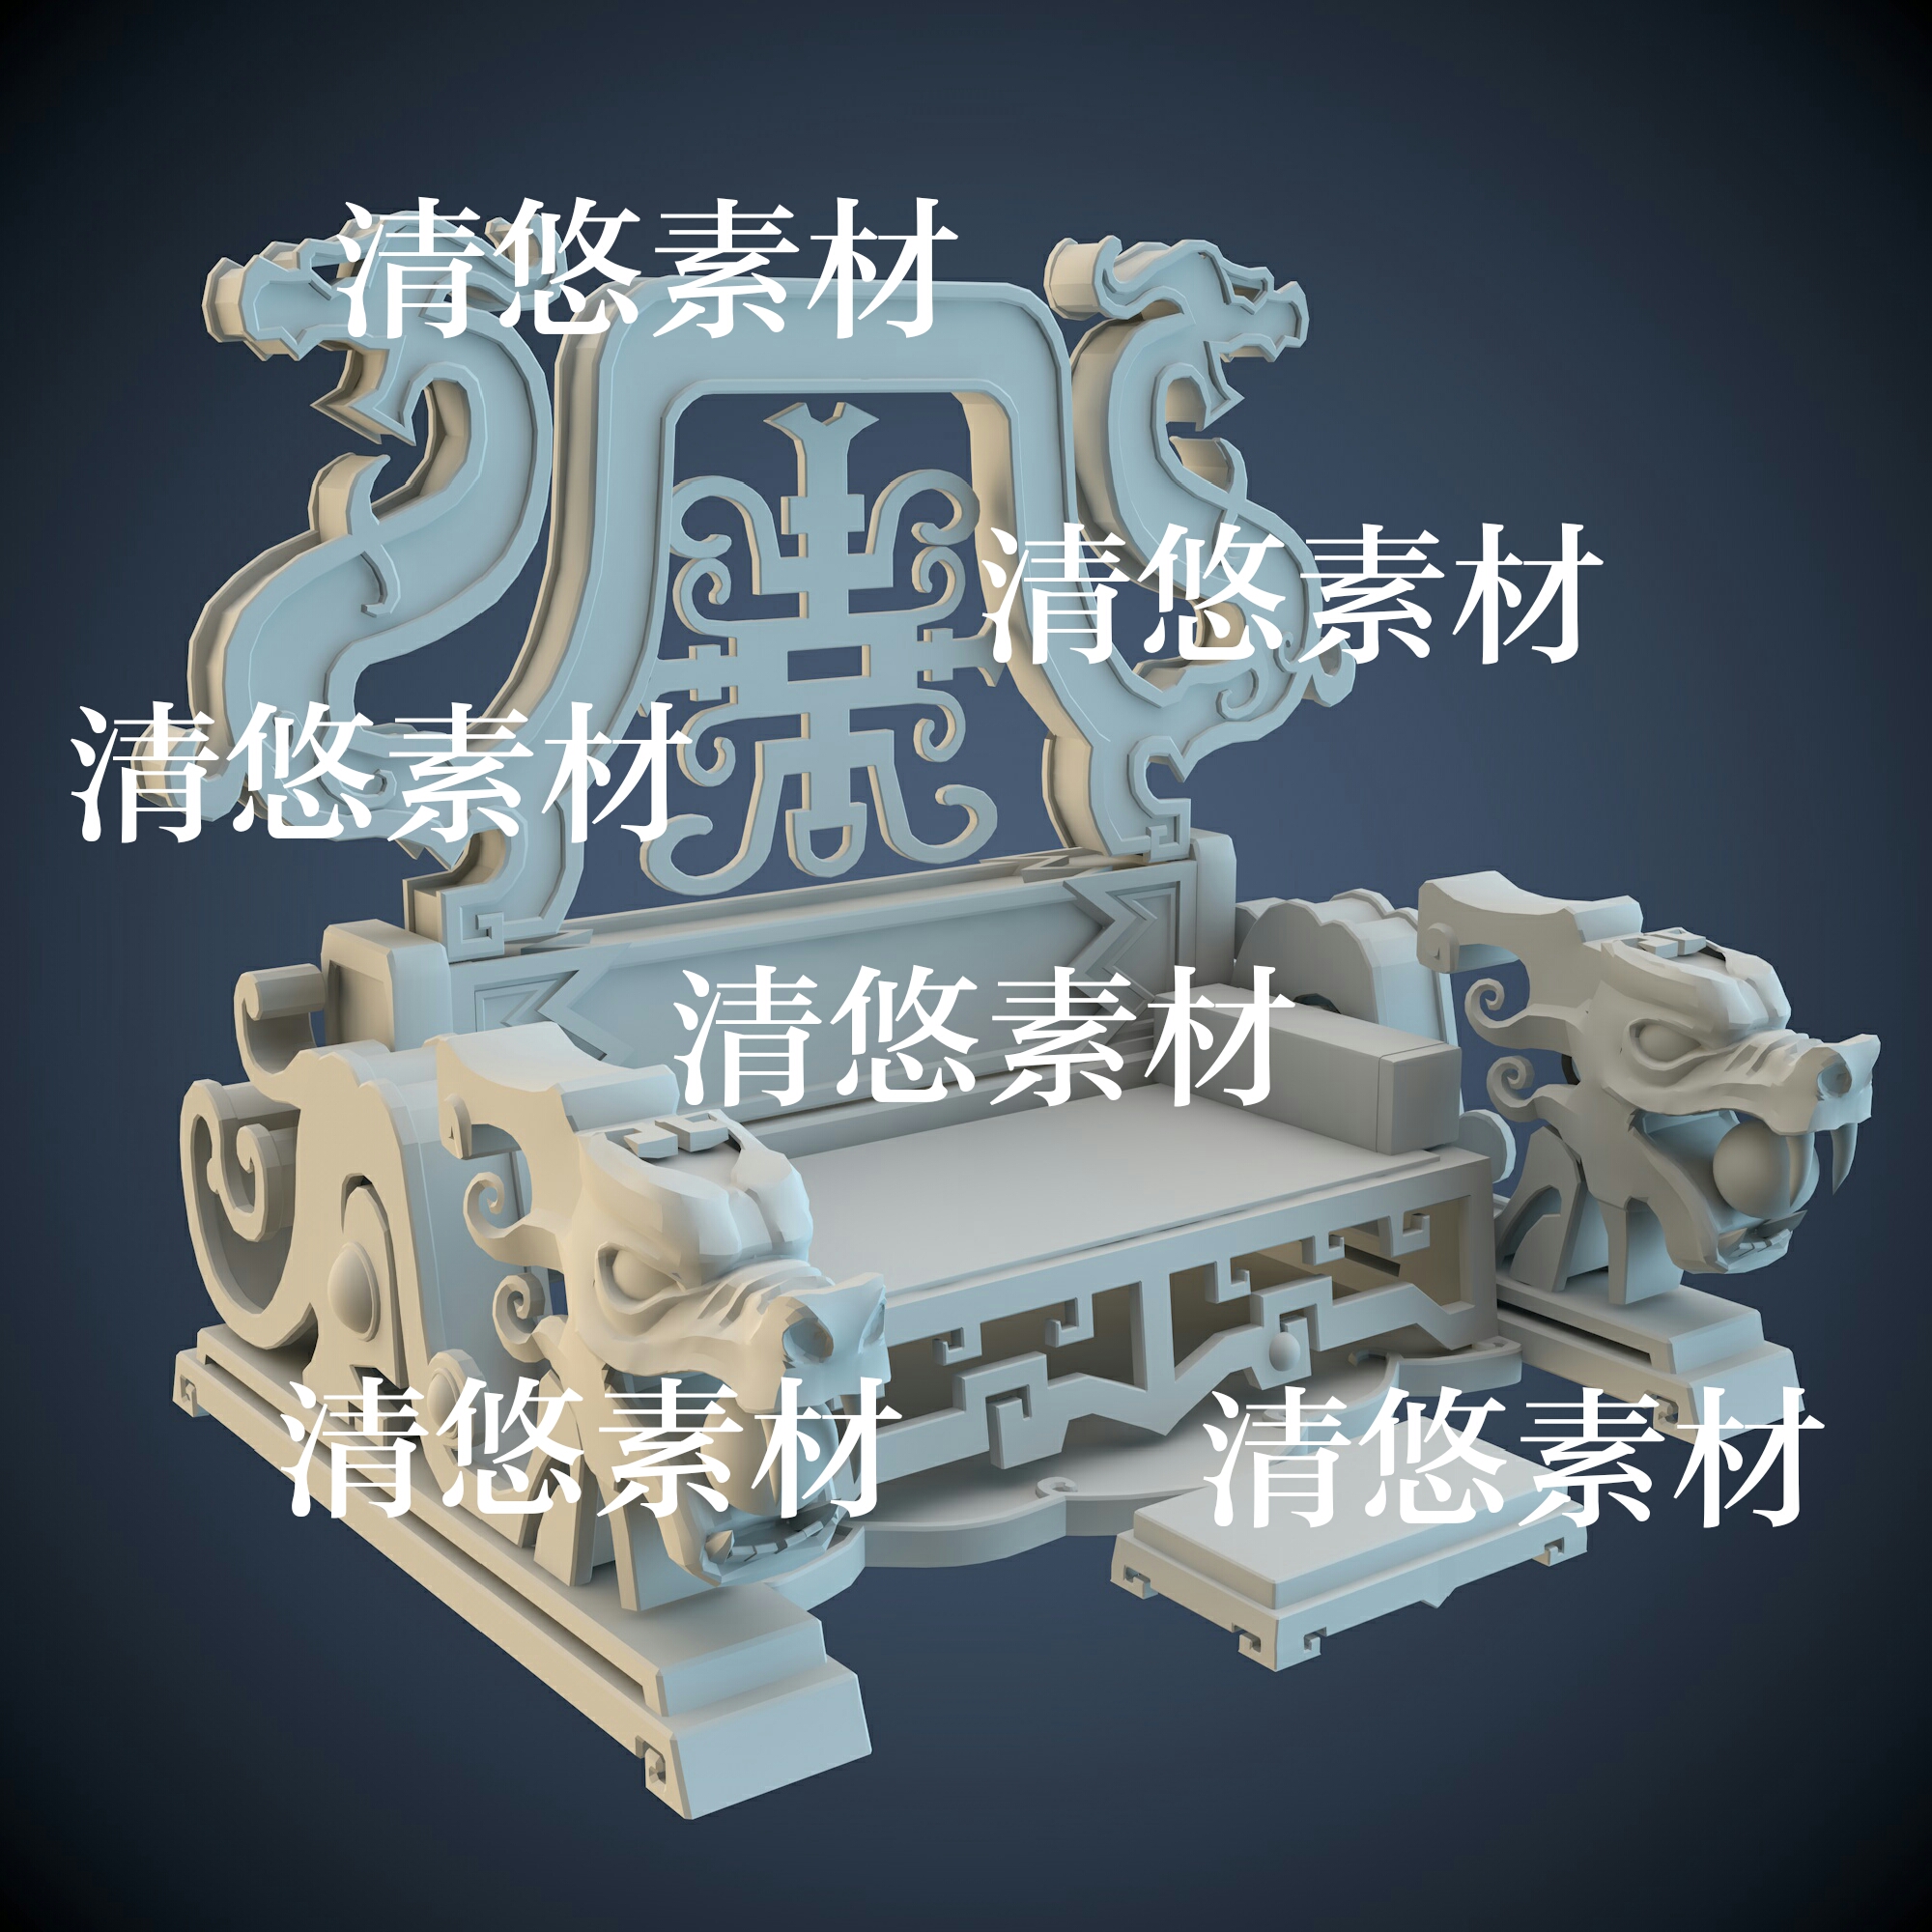 3dmax c4d fbx obj古代皇帝龙椅皇椅宝座王座模型文件 非实物A749